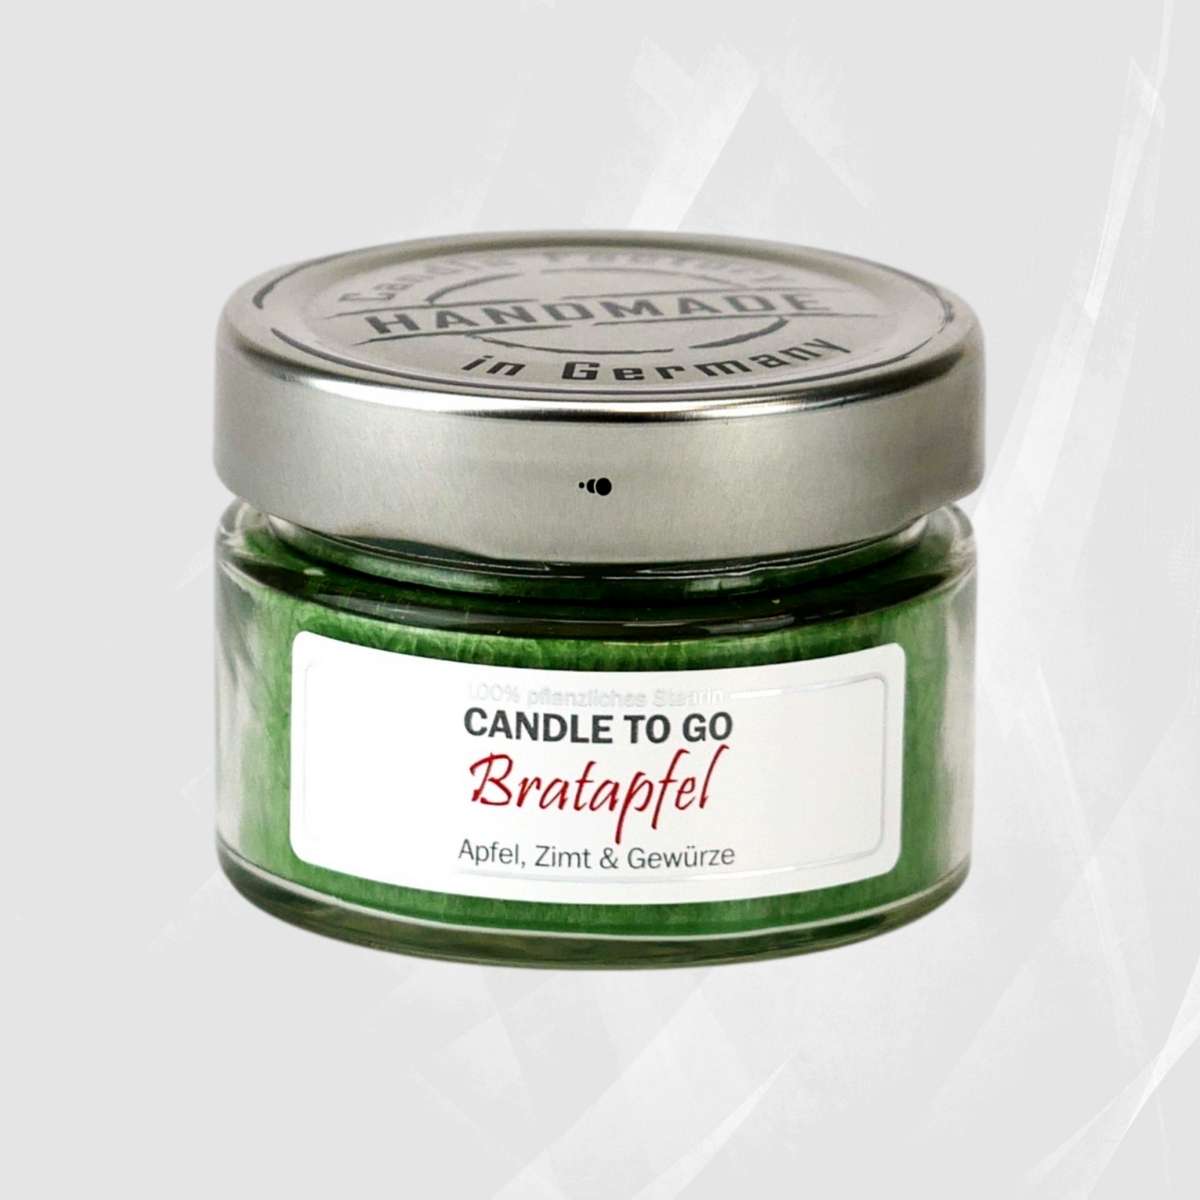 Bratapfel - Candle to Go Duftkerze von Candle Factory